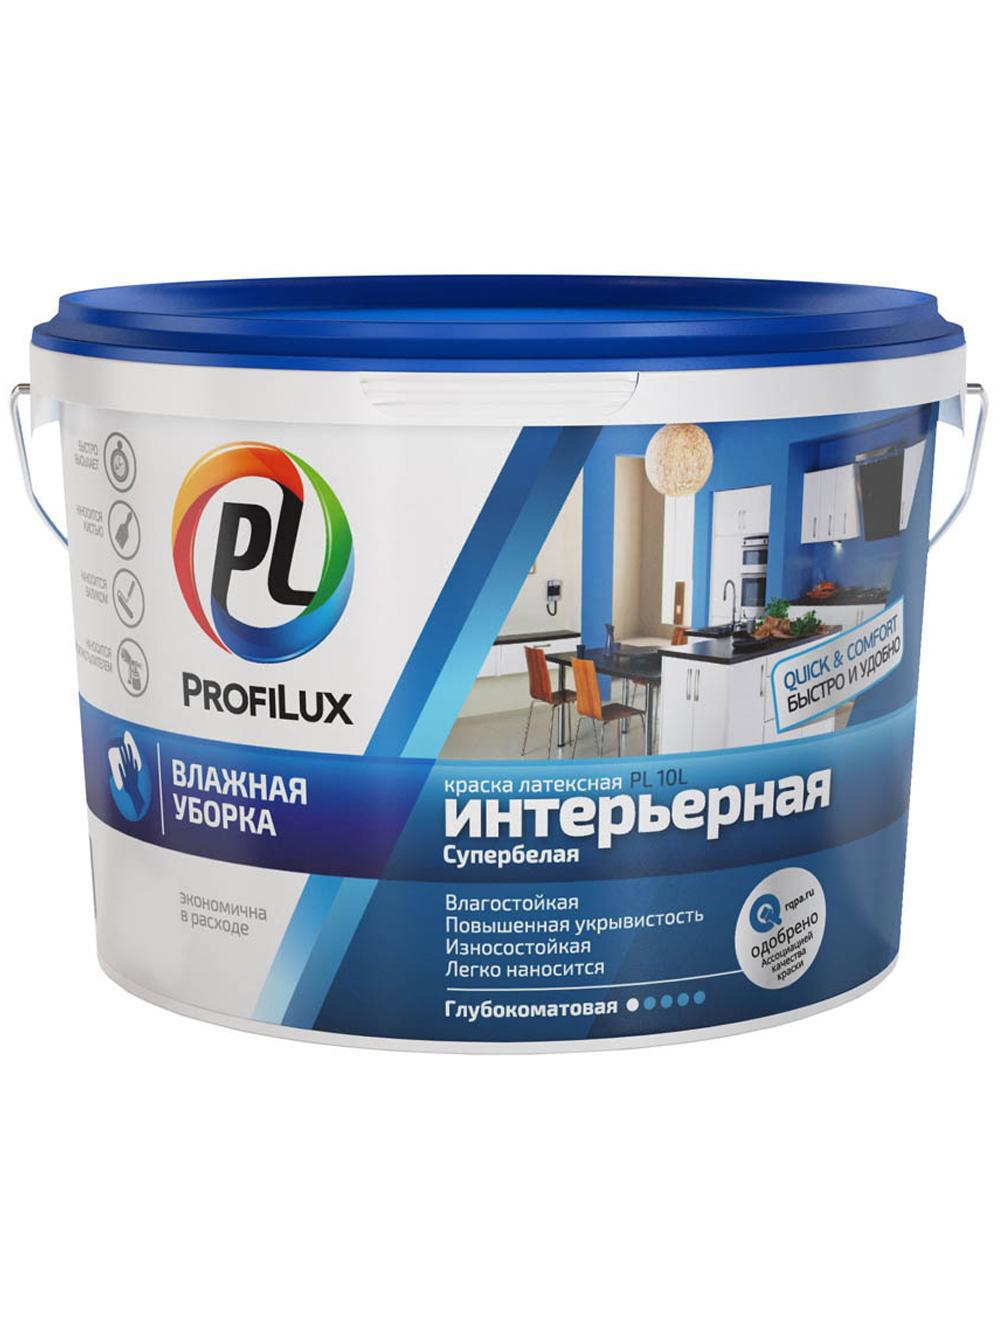 90190627 Краска для стен и потолков латексная Profilux ВД краска PL- 10L глубокоматовая белая 3 кг STLM-0126776 DUFA